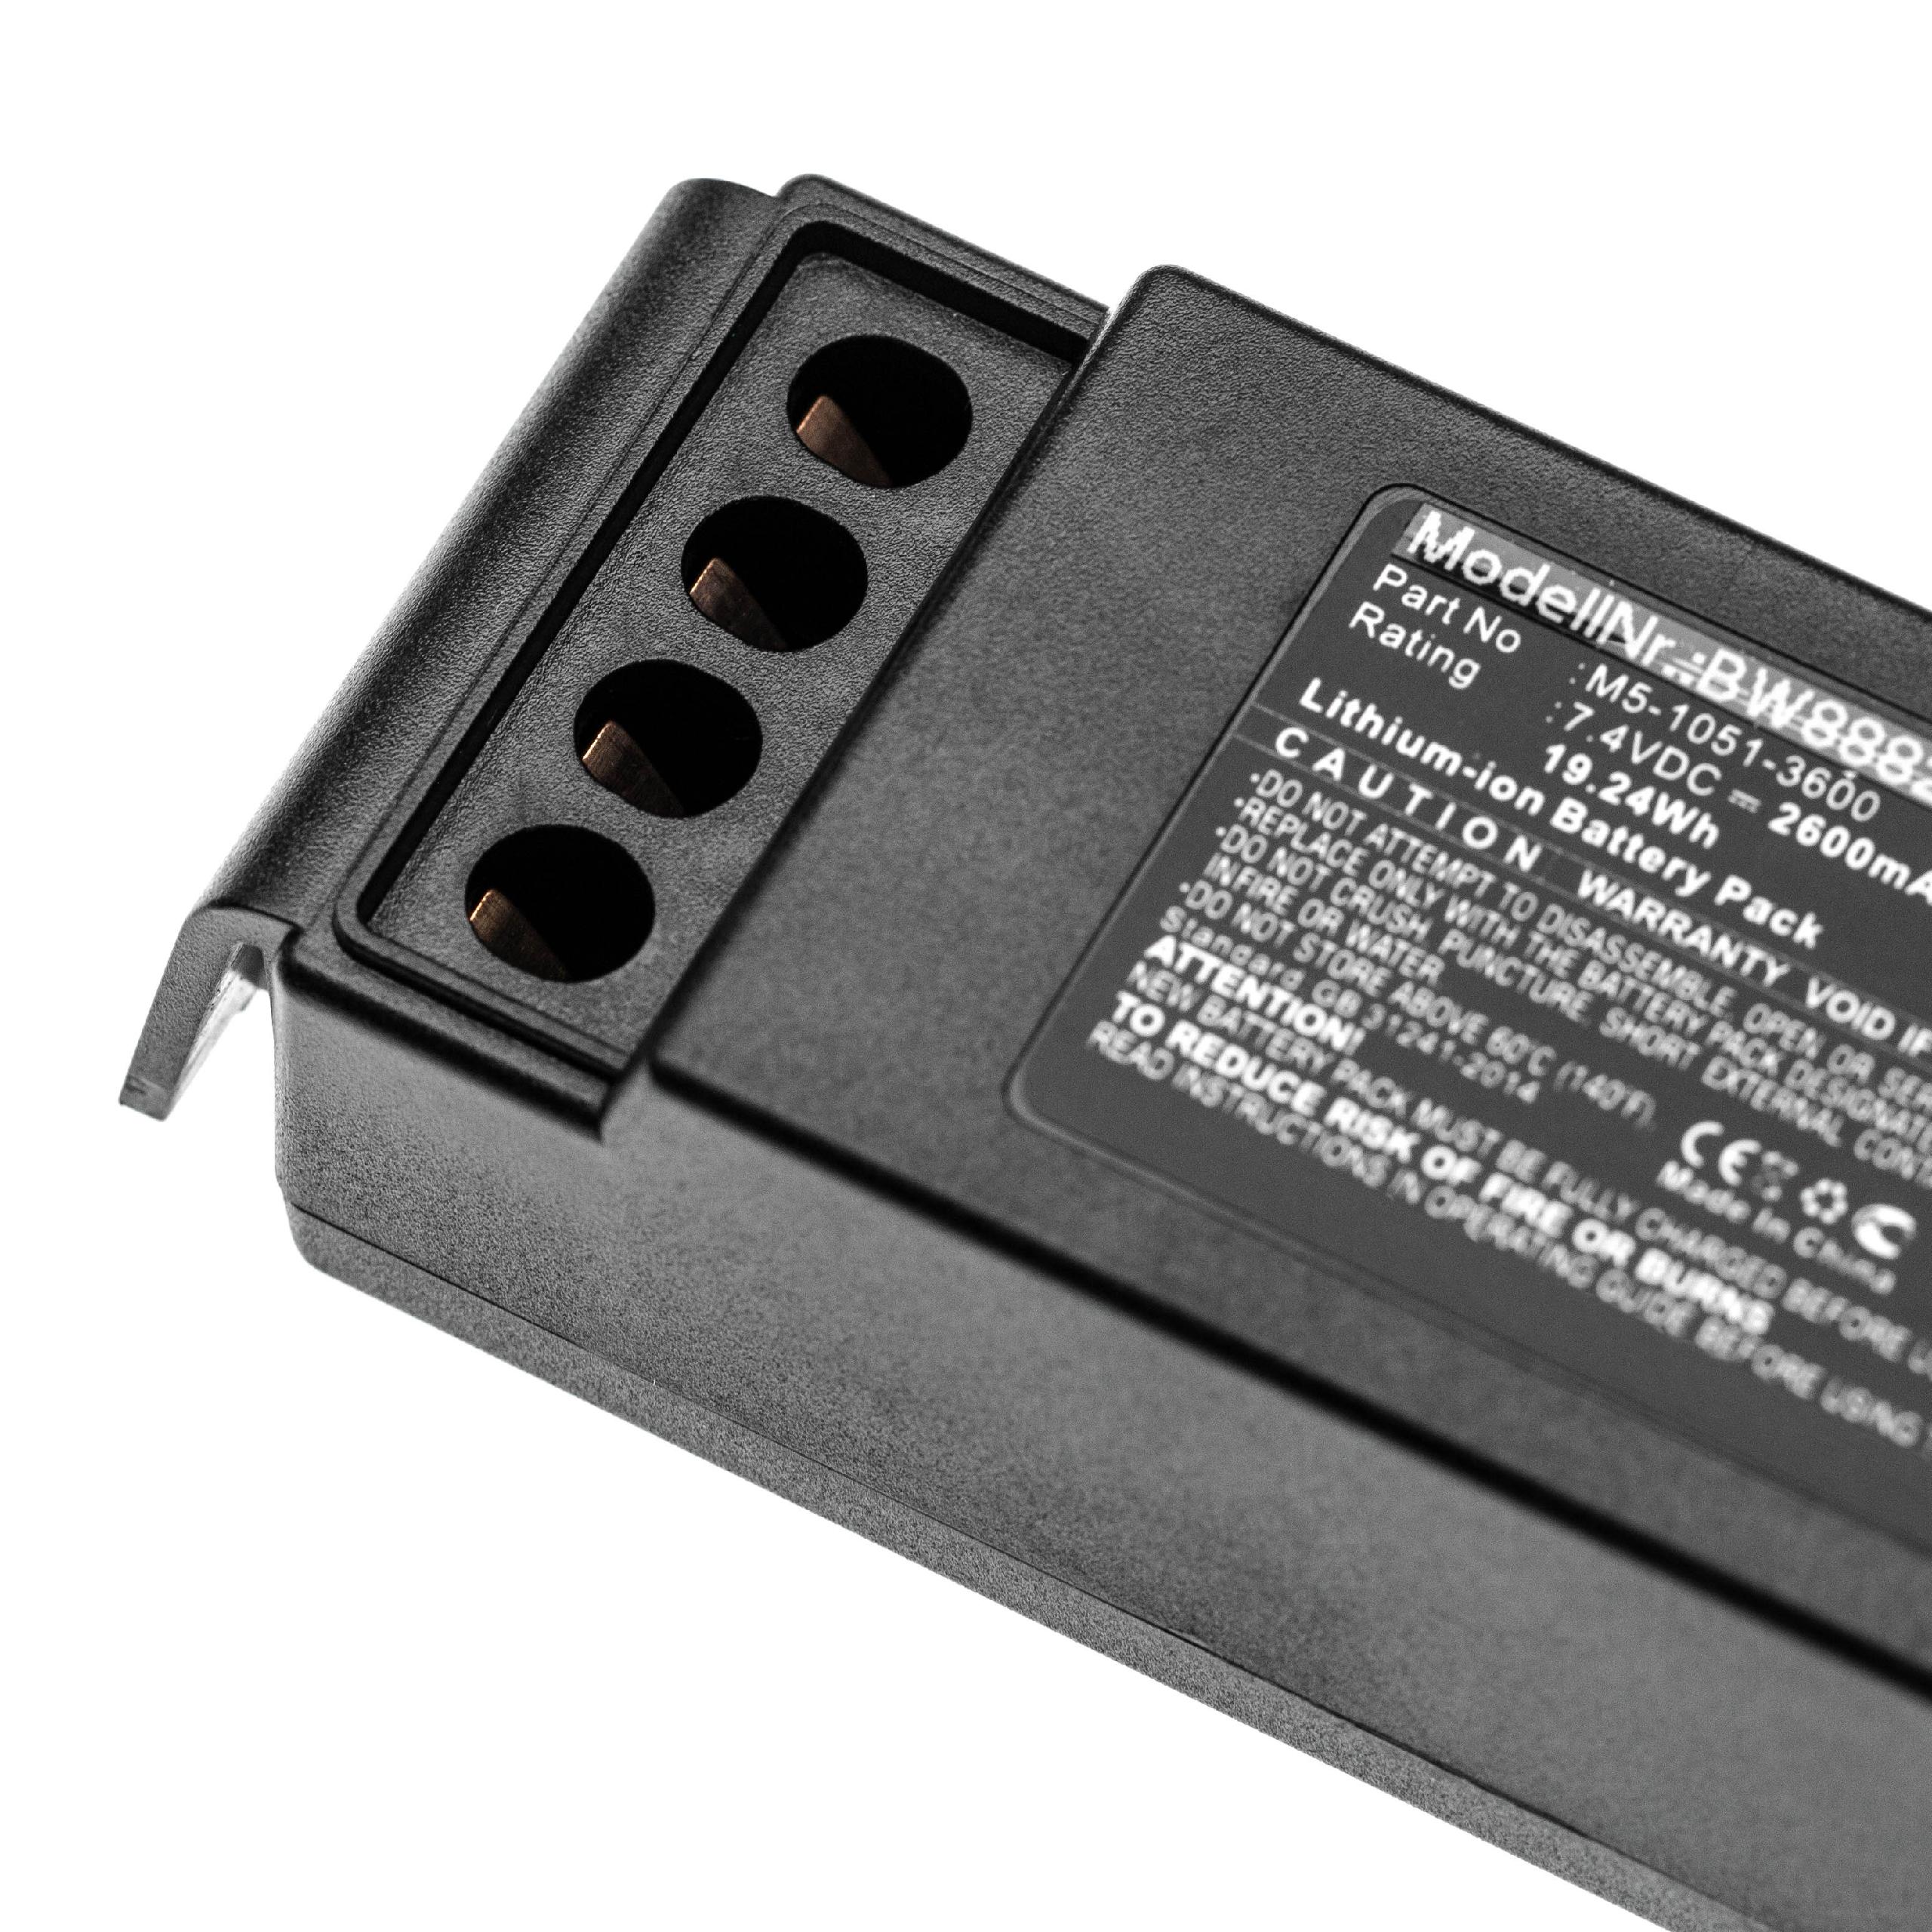 Akumulator do zdalnego sterowania zamiennik Cavotec M5-1051-3600 - 2600 mAh 7,4 V Li-Ion